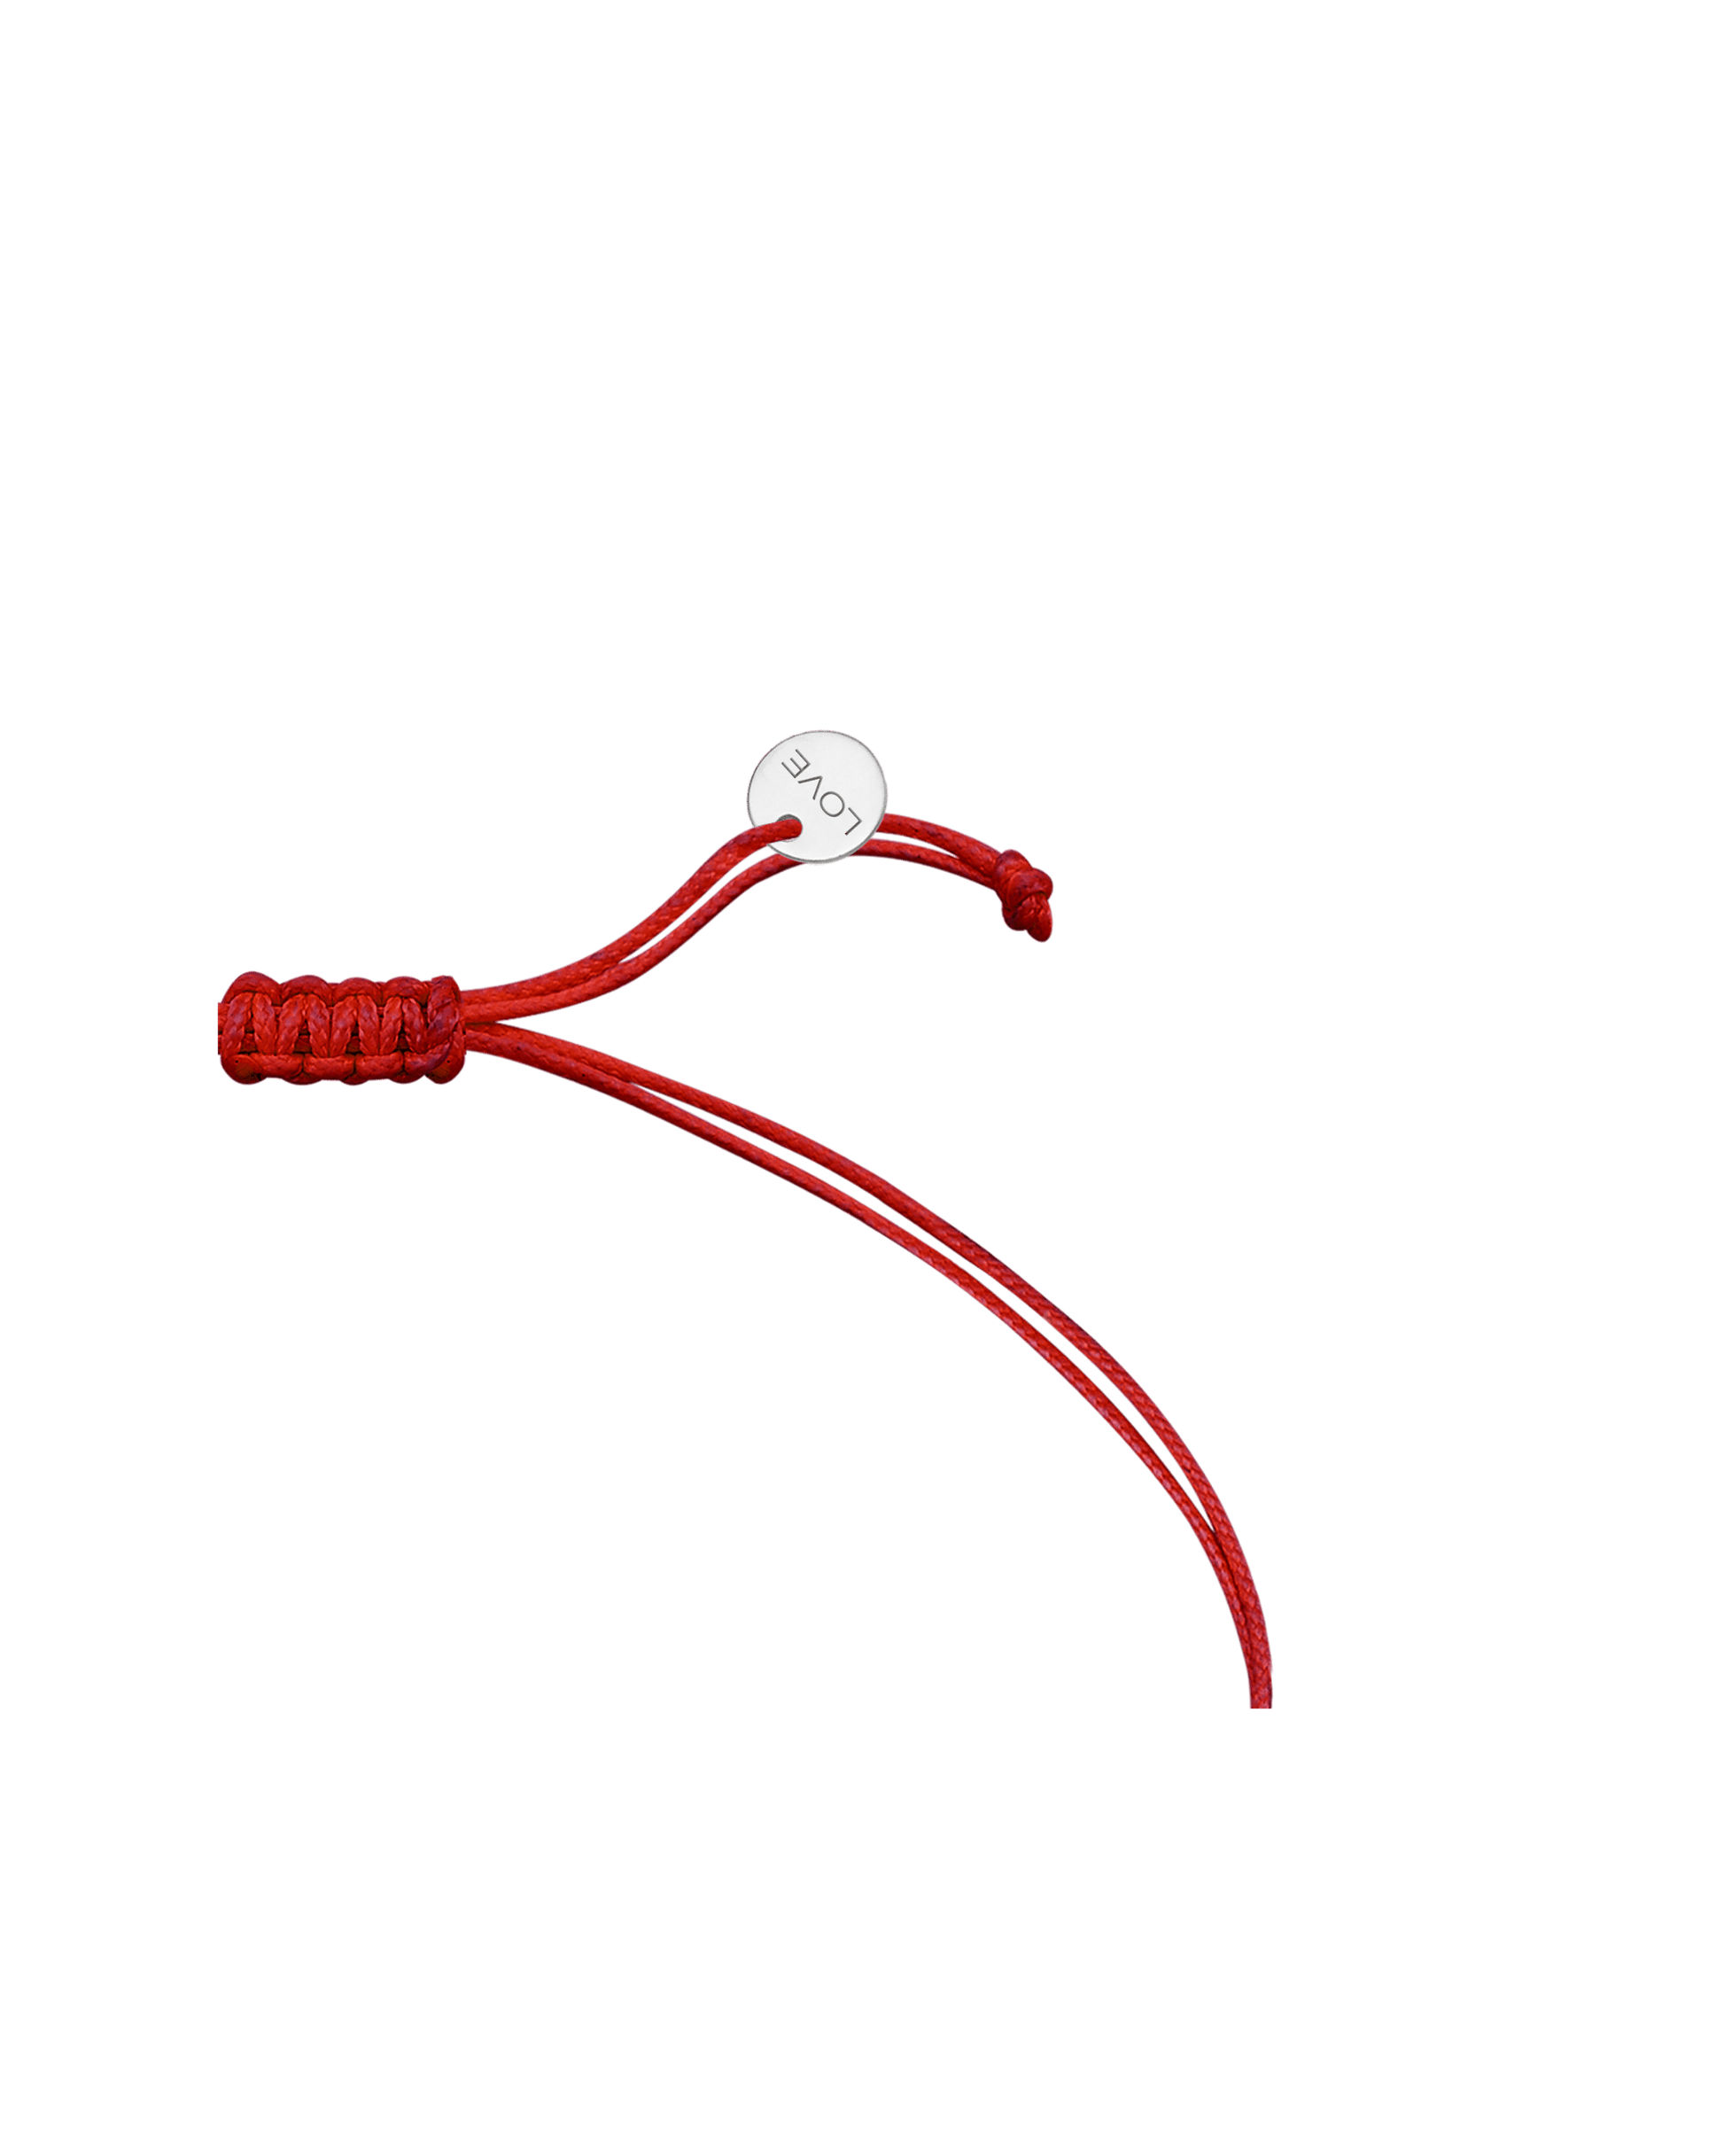 Elephant [RED] - 14K White Gold Bracelets magal-dev 